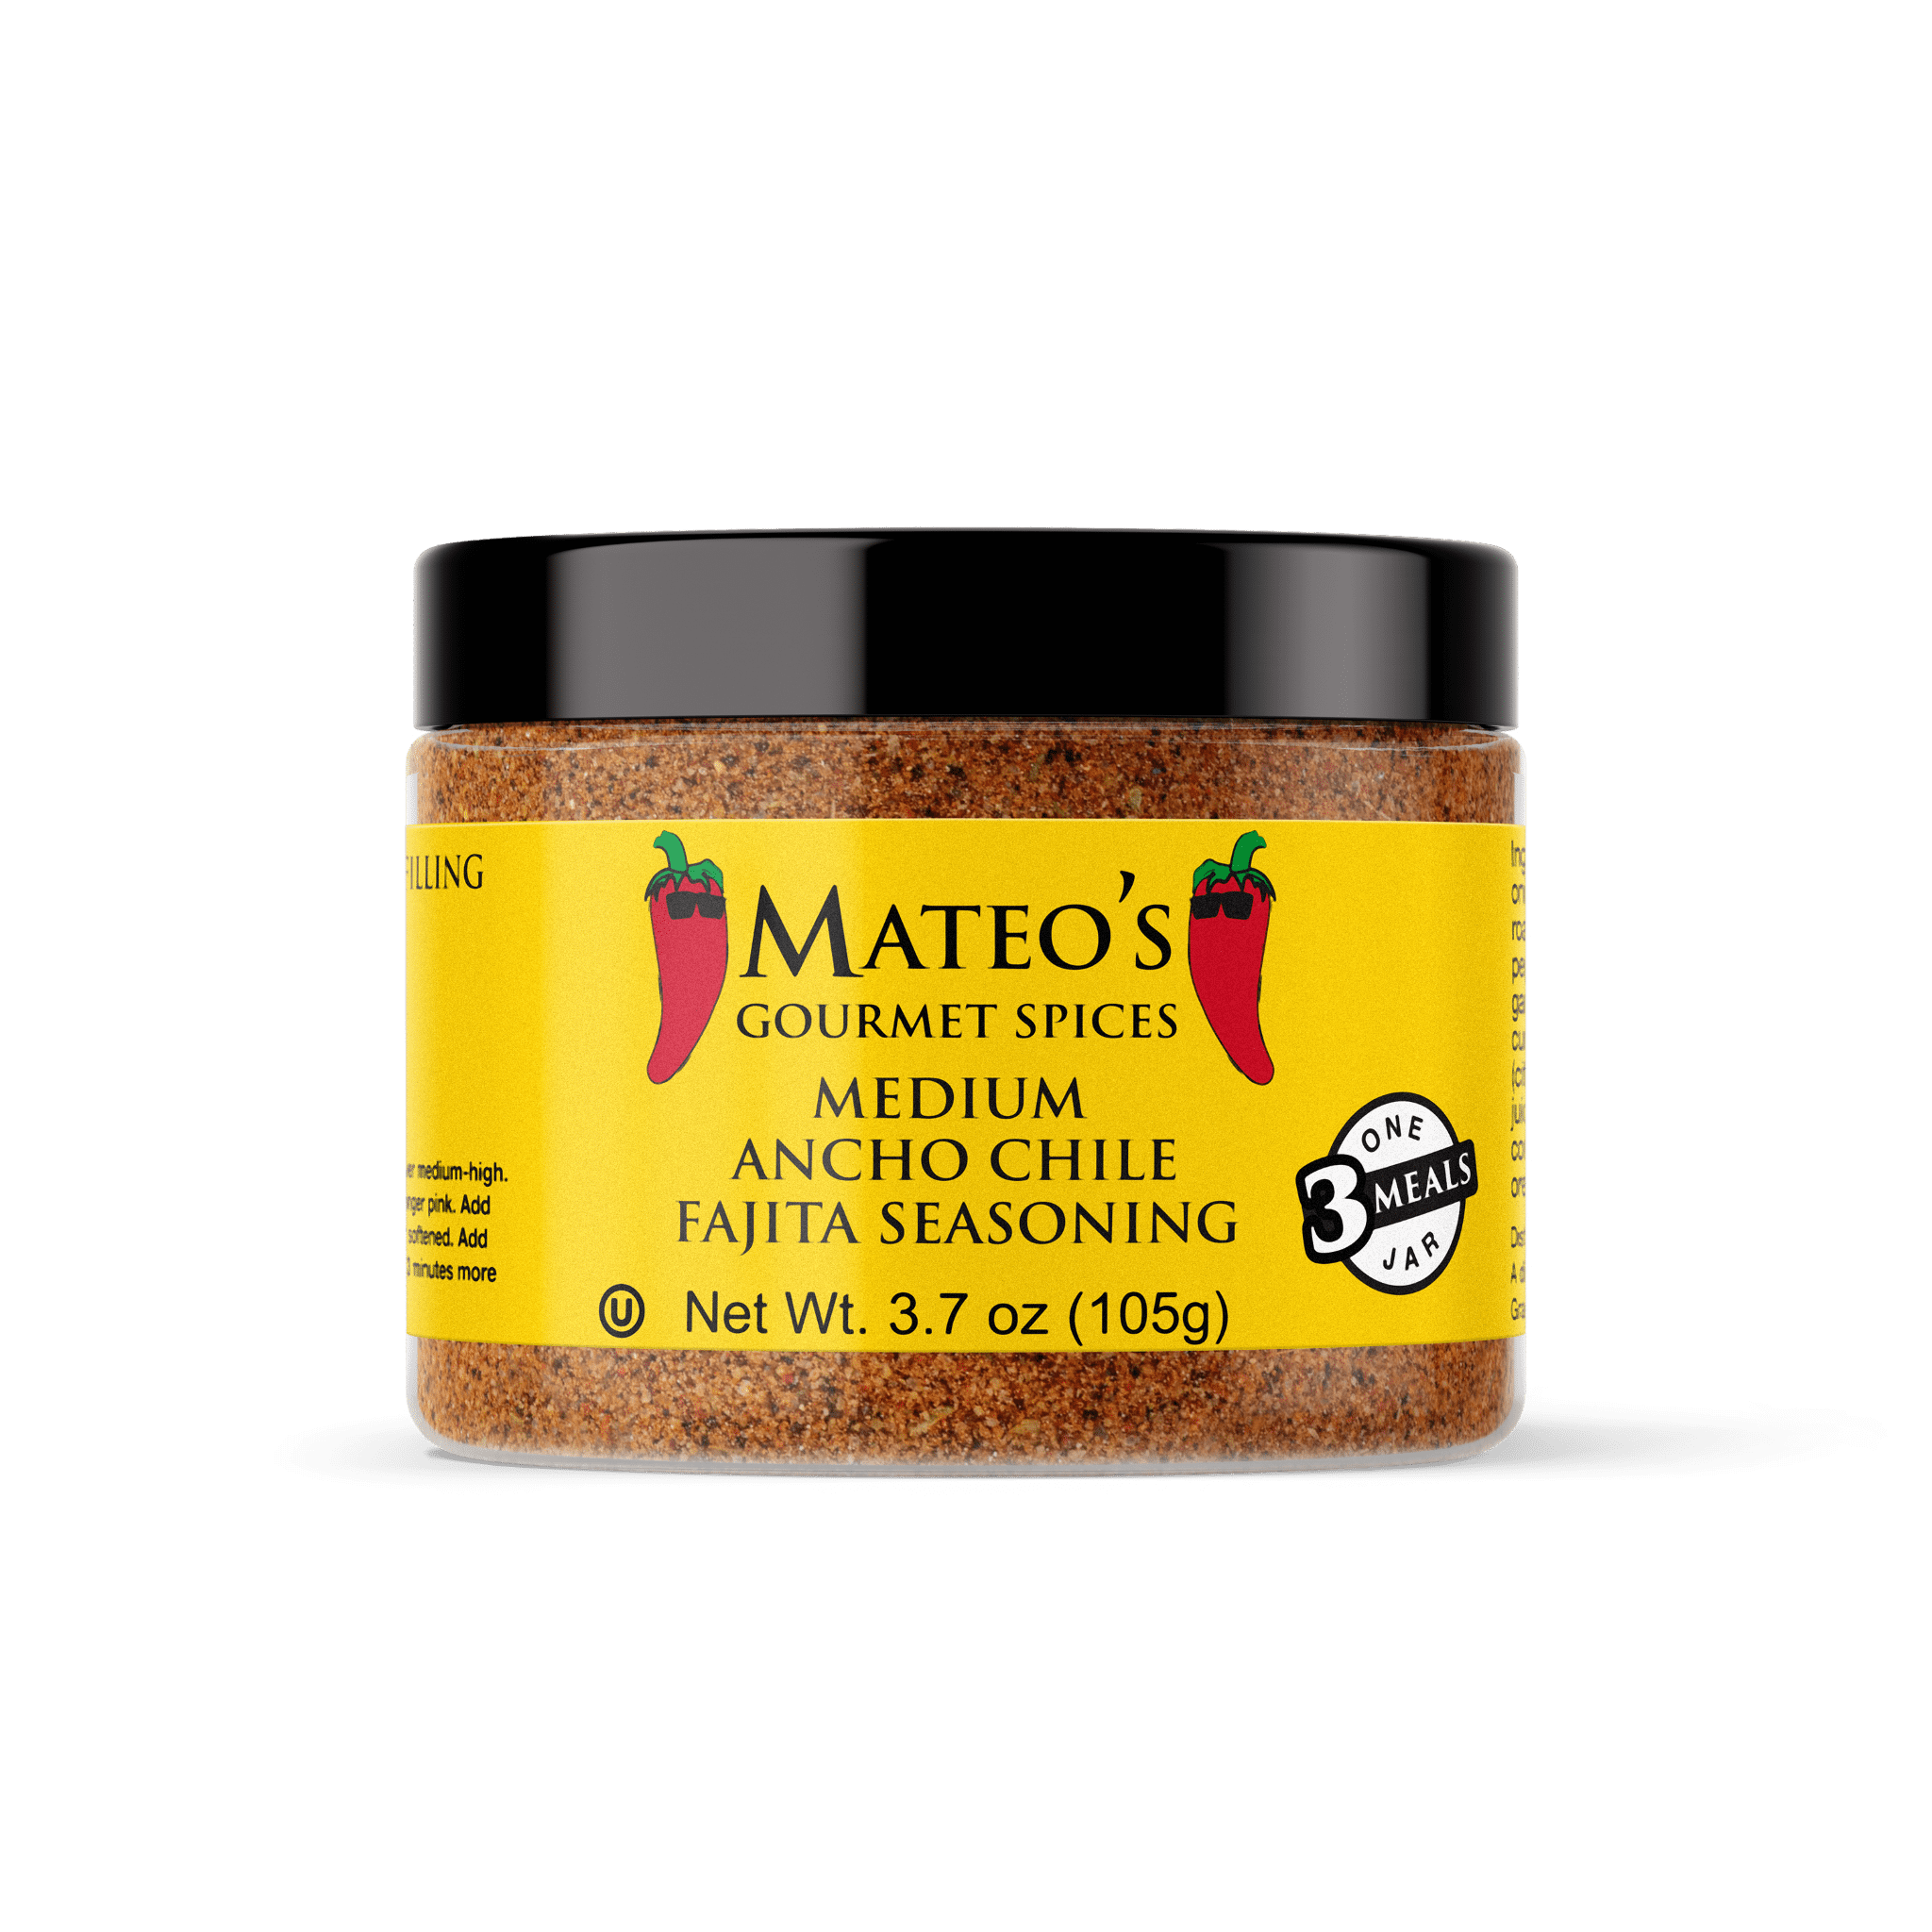 Mateos Brand Ancho Chile Fajita Seasoning Mix (3 Meals), 3.7 oz